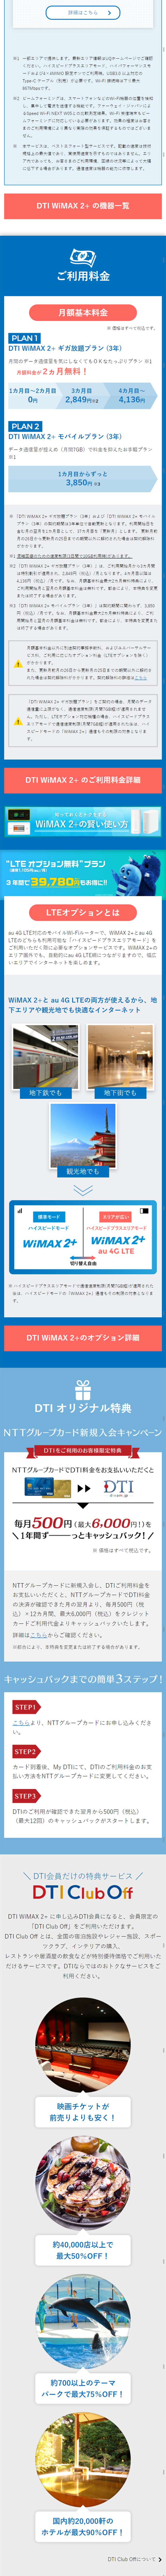 DTI WiMAX 2+_sp_2